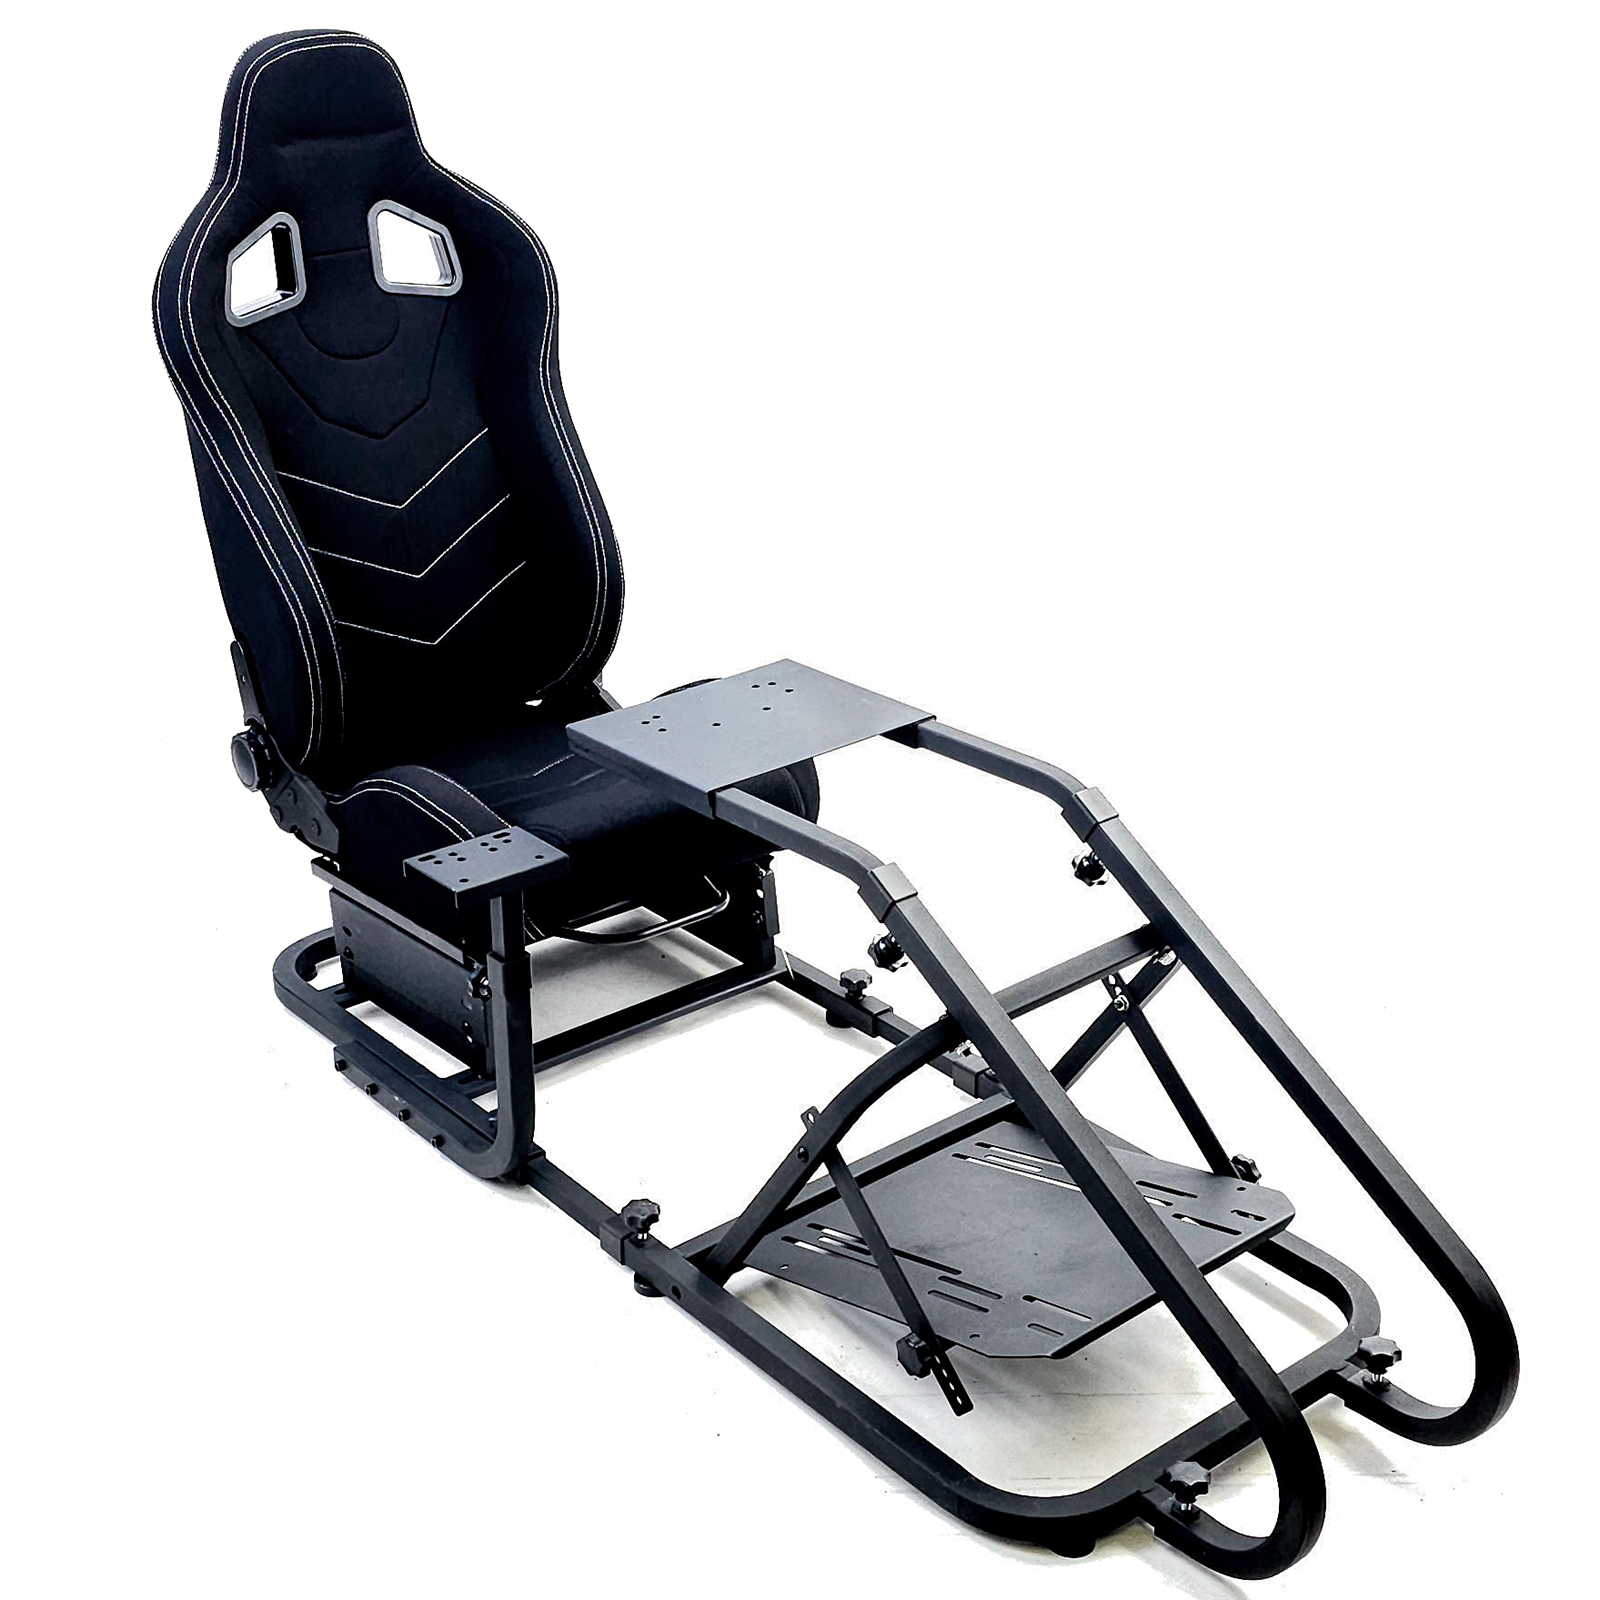 Sim Rig 1 mit Sitz Cockpit Gestell Renn Racing Simulator für